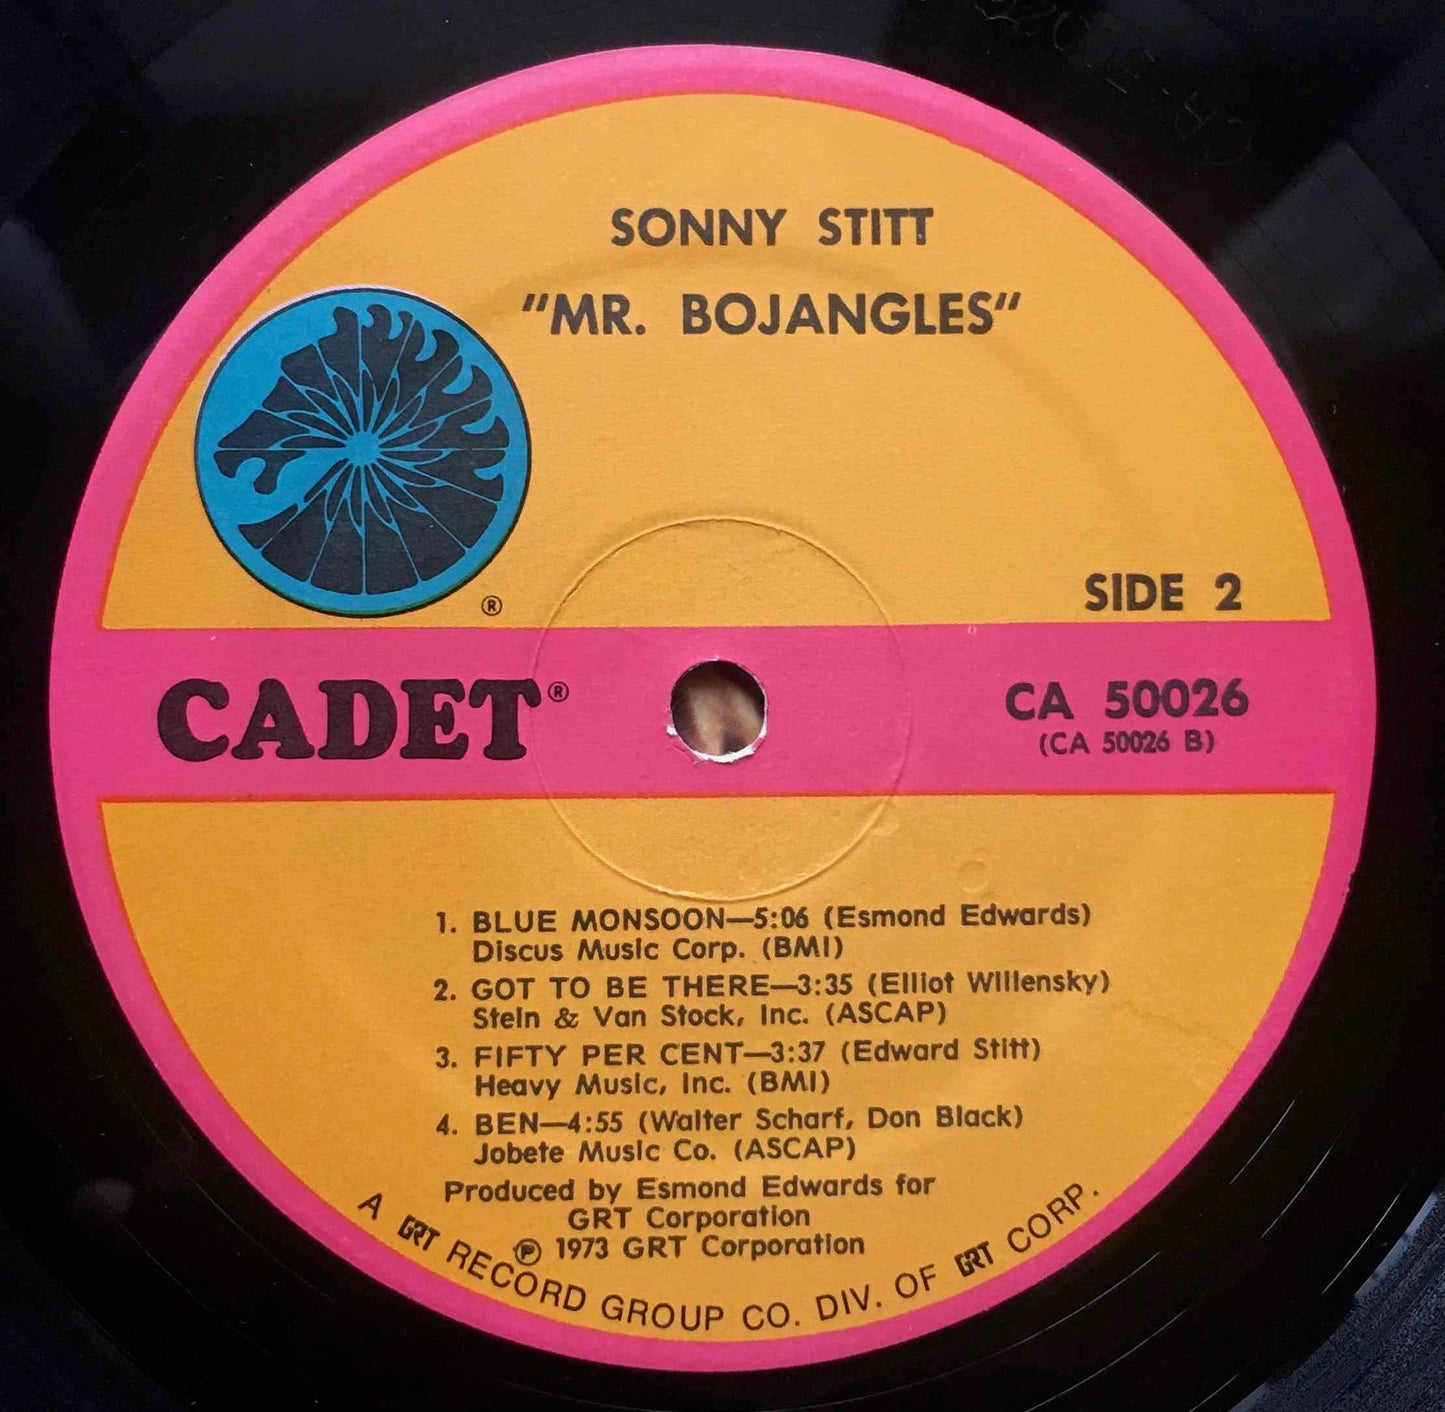 Sonny Sitt Mr Boiangles LP Label image side 2